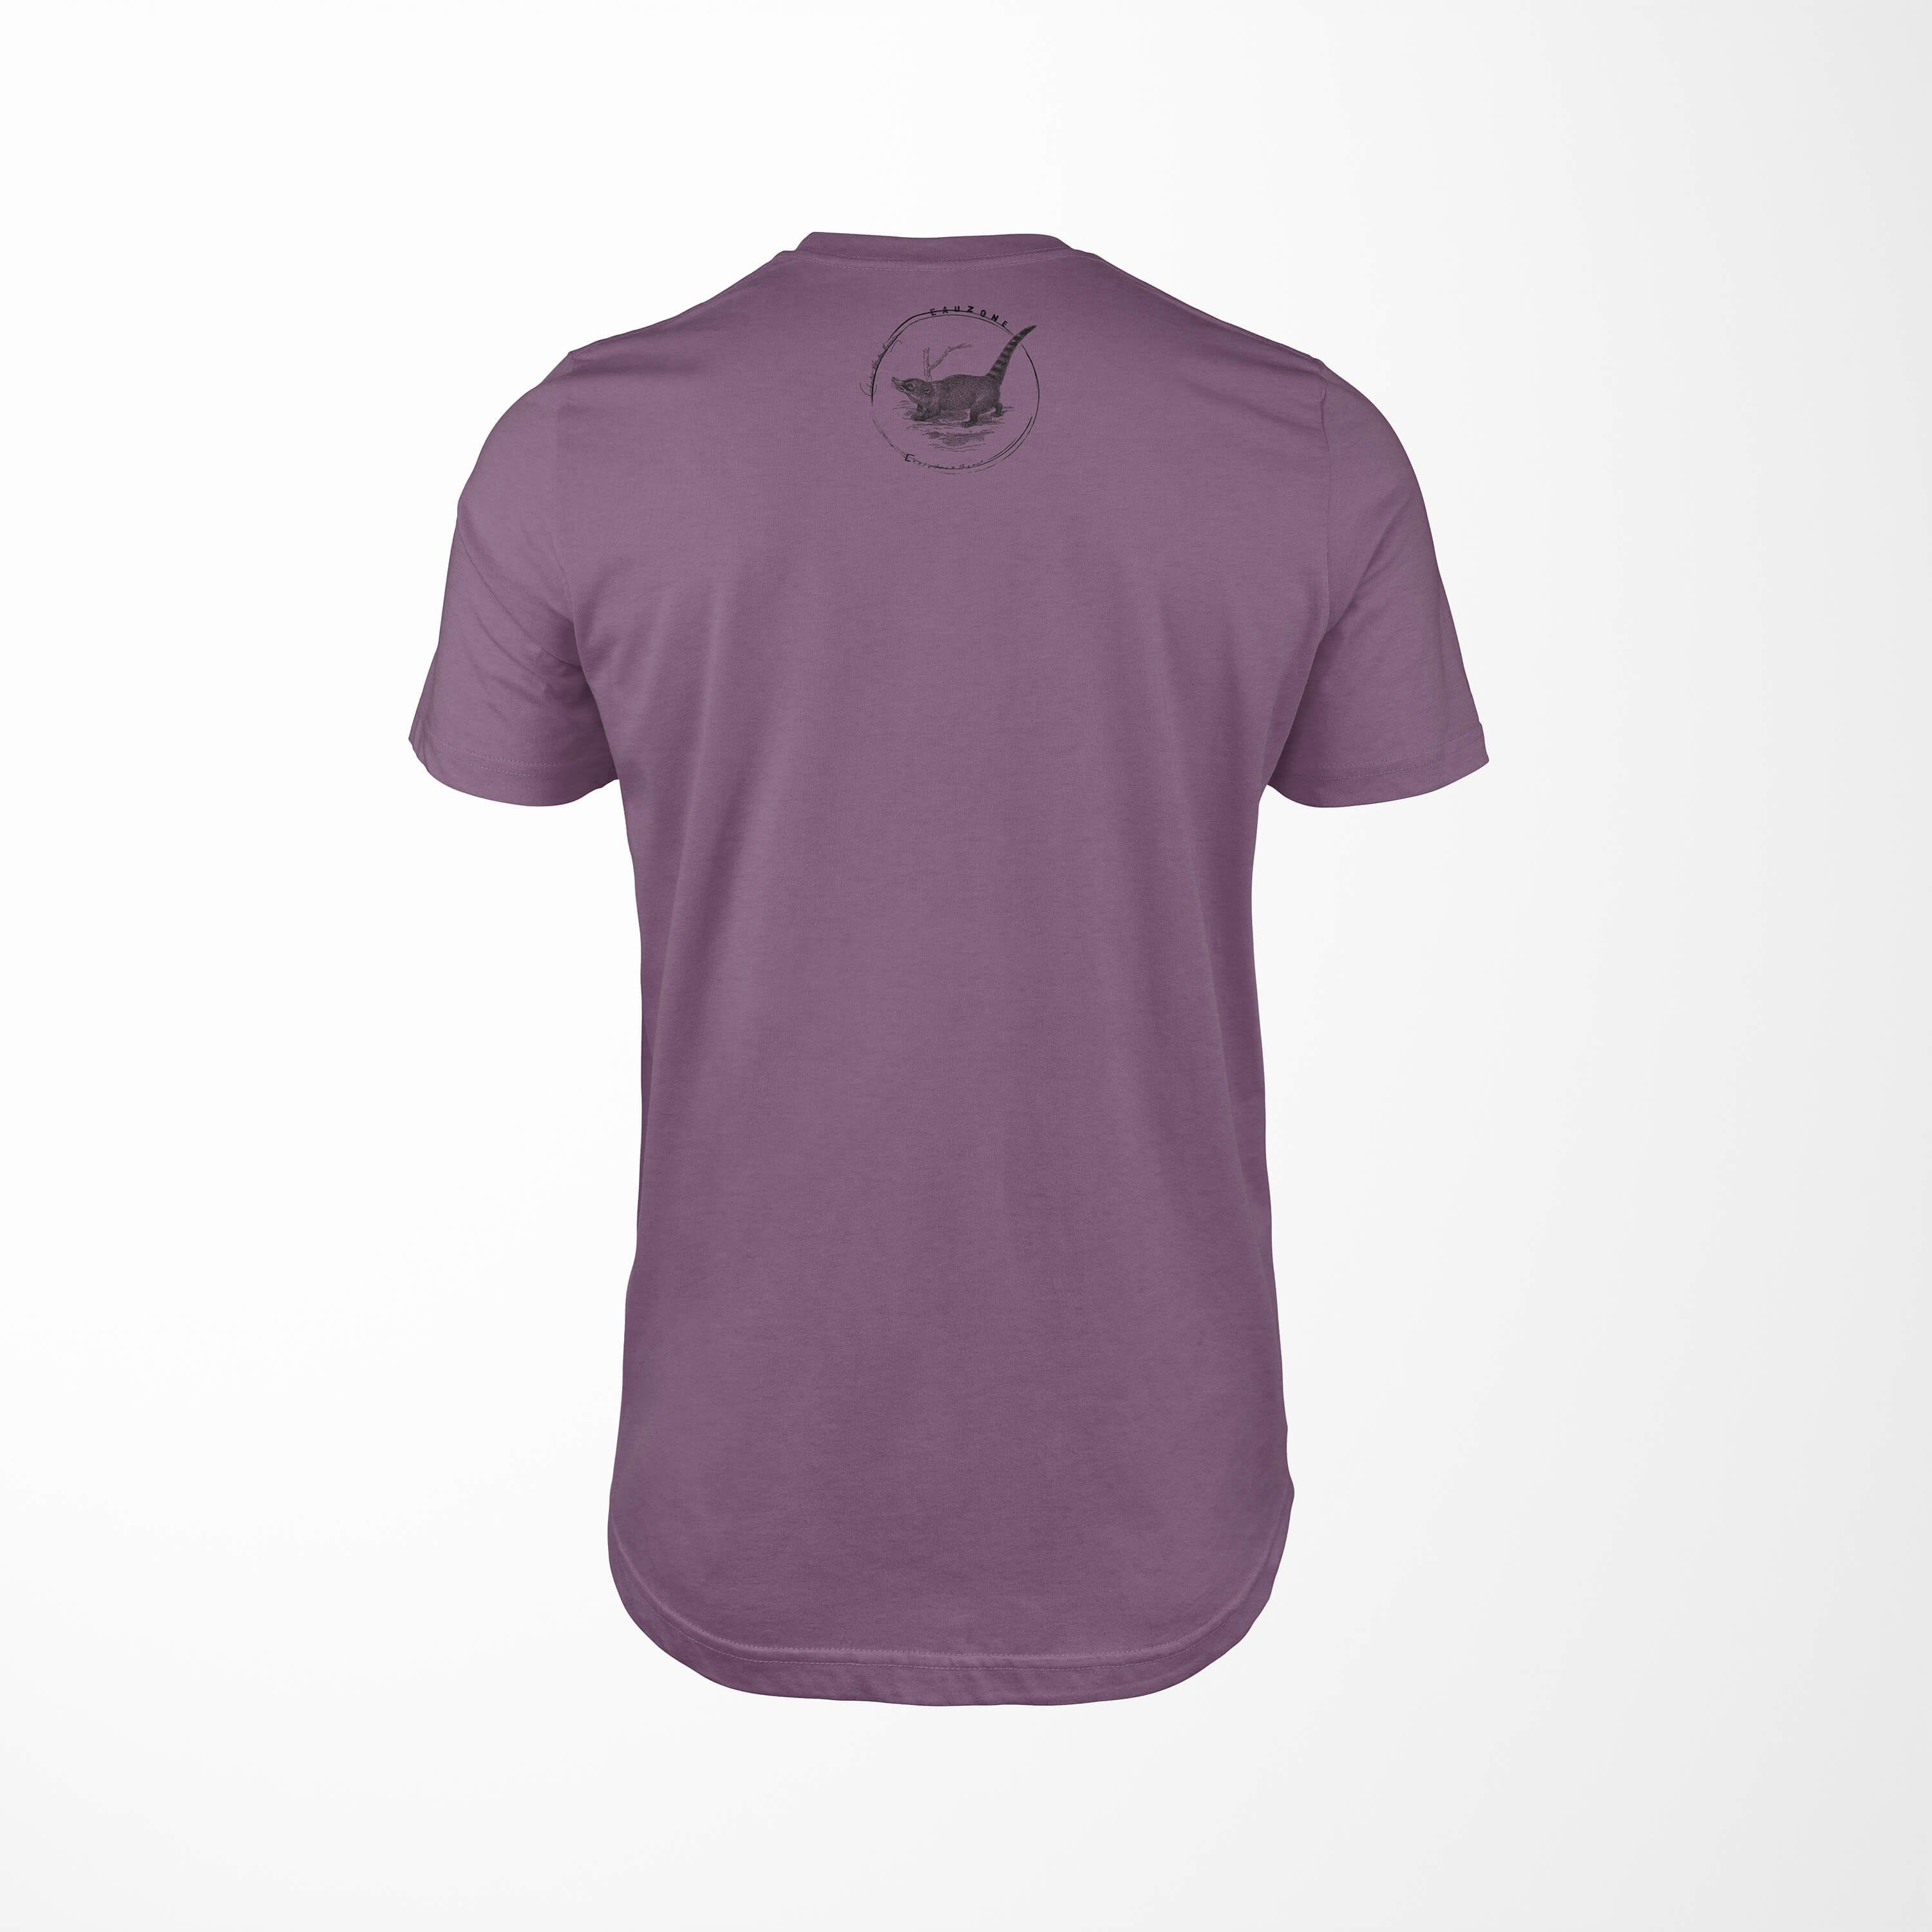 Shiraz Herren T-Shirt Nasenbär T-Shirt Evolution Art Sinus